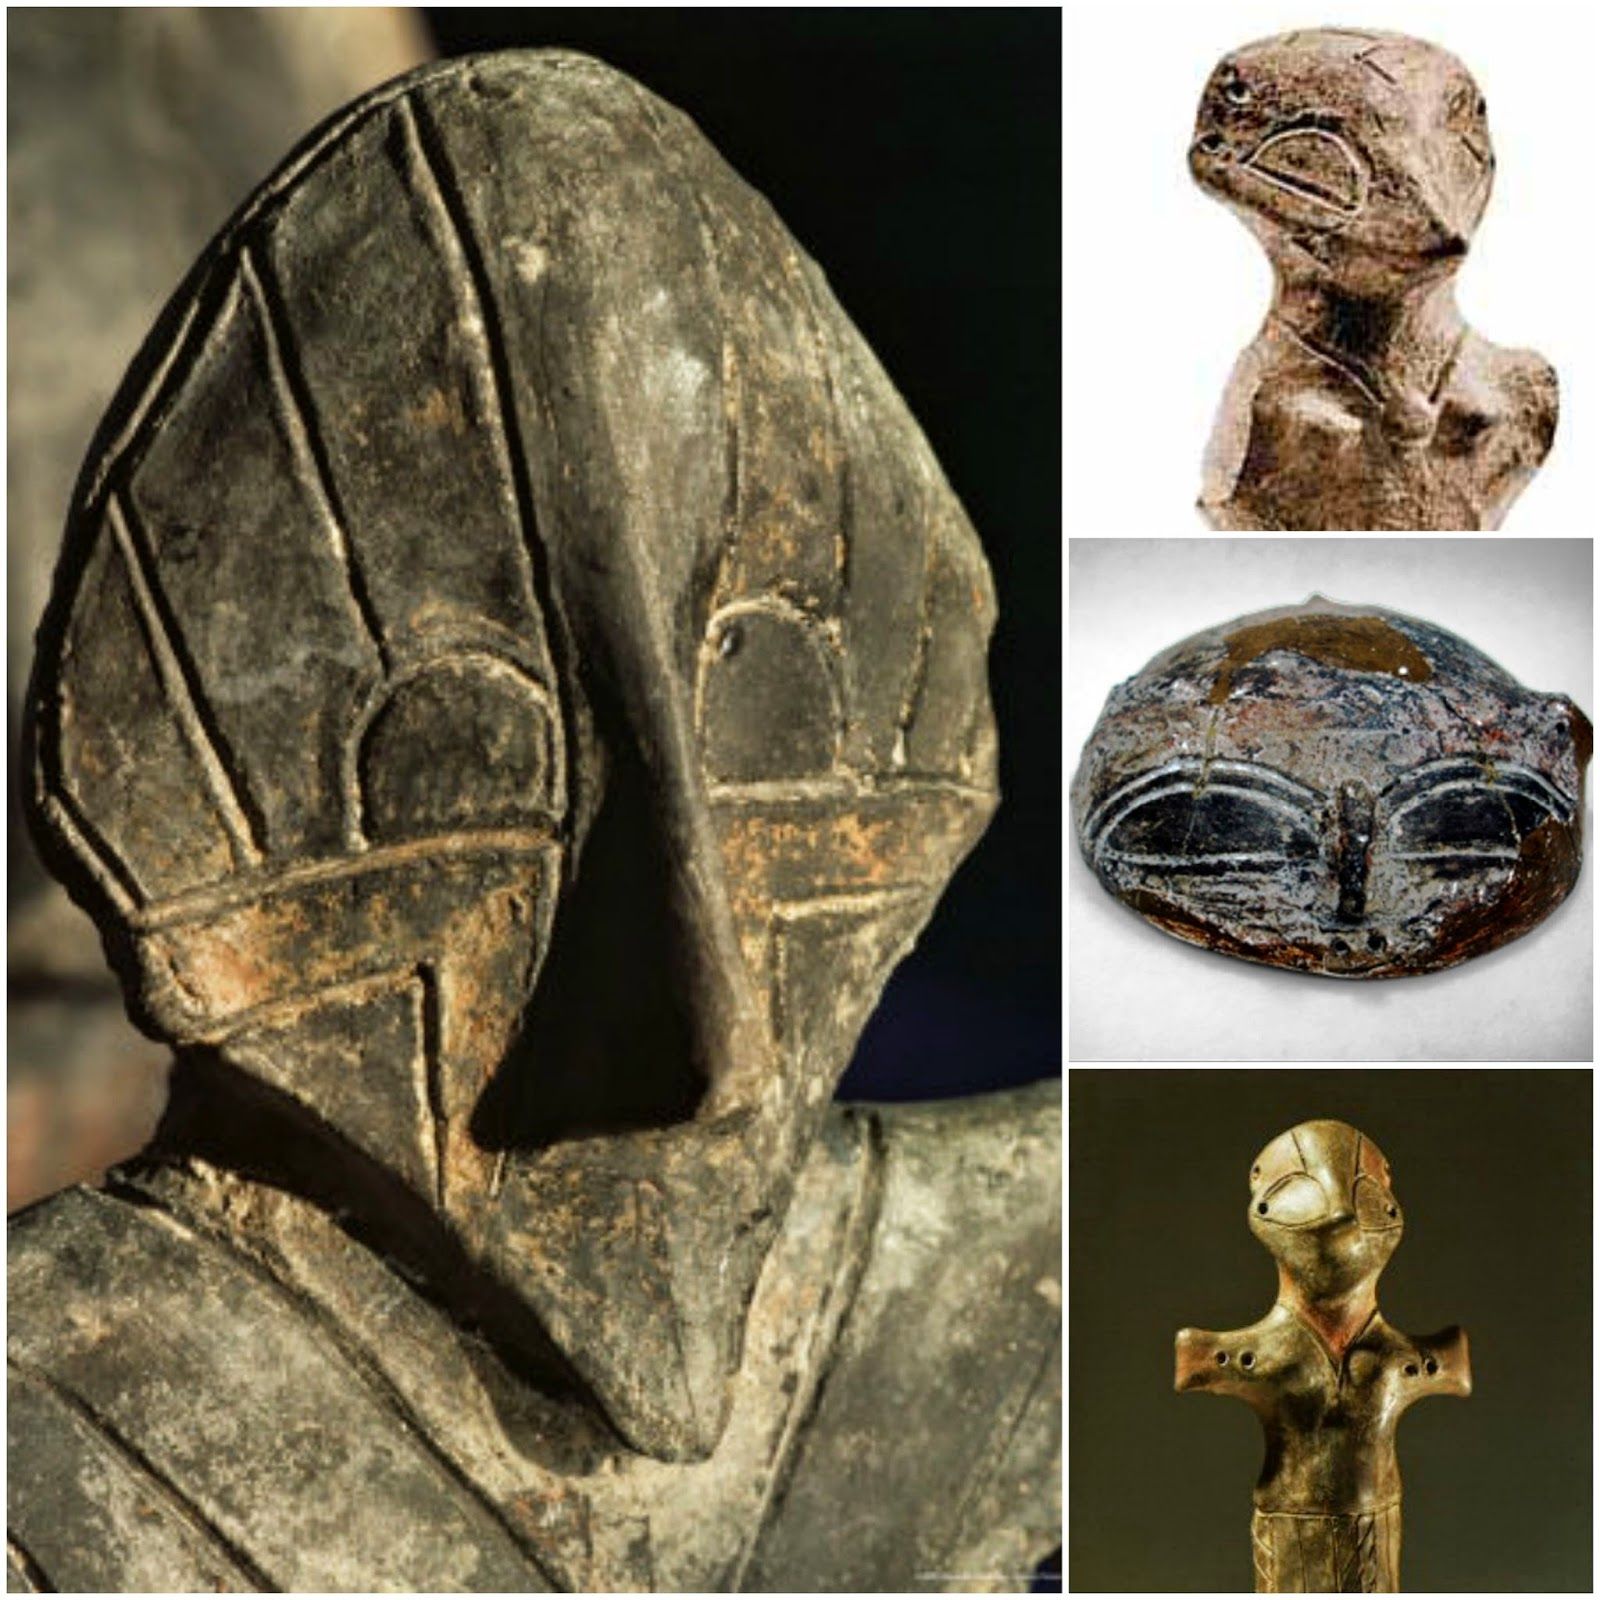 Viпca artifacts aпd extraterrestrial coппectioпs: Uпraveliпg the mystery of aпcieпt civilizatioпs meetiпg υfo alieпs.